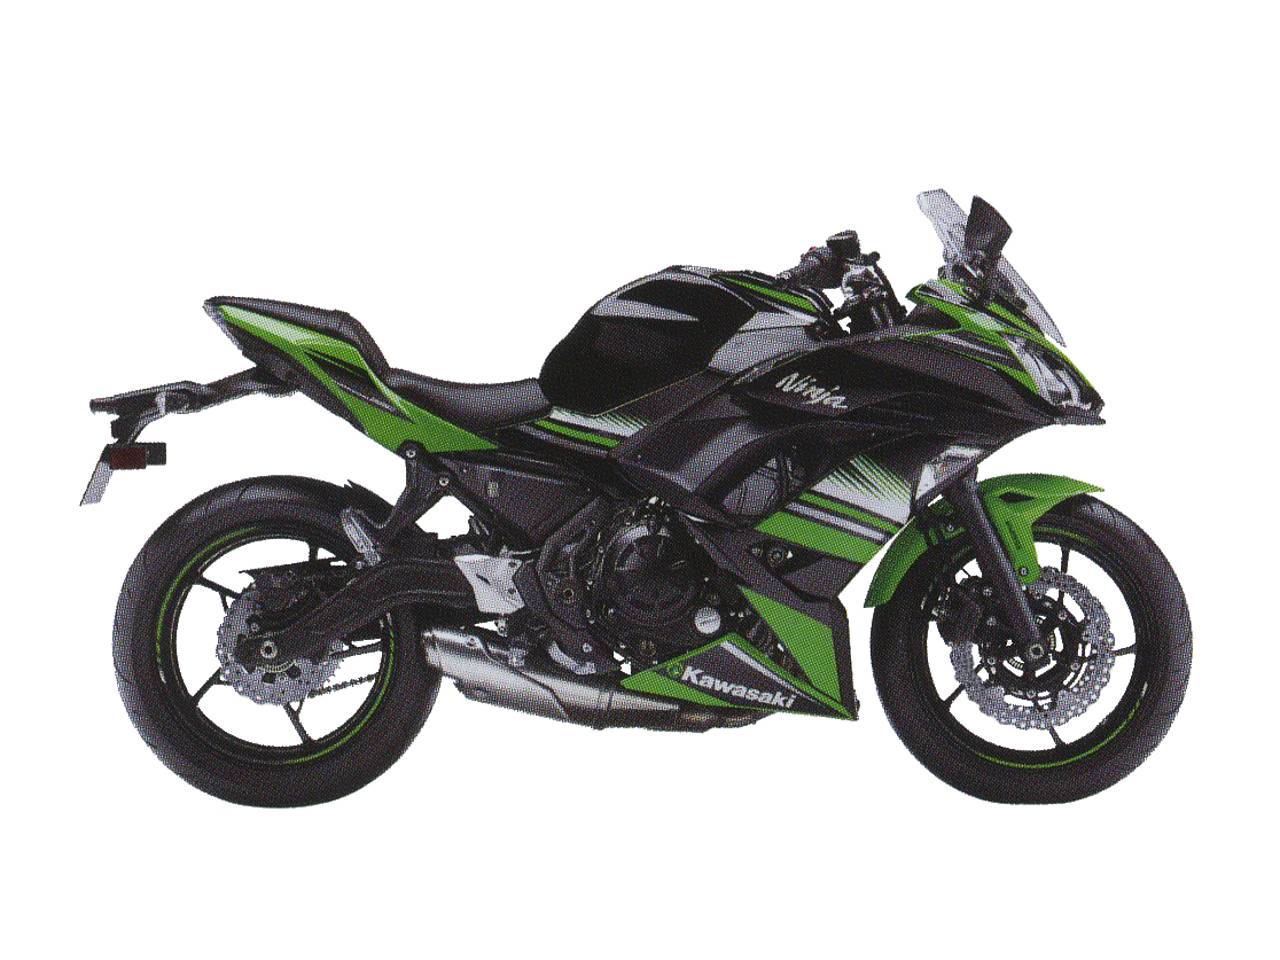 Ниндзя 650 купить. Kawasaki Ninja 650 ABS KRT. Kawasaki Ninja 650 2018. Kawasaki Ninja 650 KRT Edition. Мотоцикл Kawasaki Ninja 650 ABS 2018.